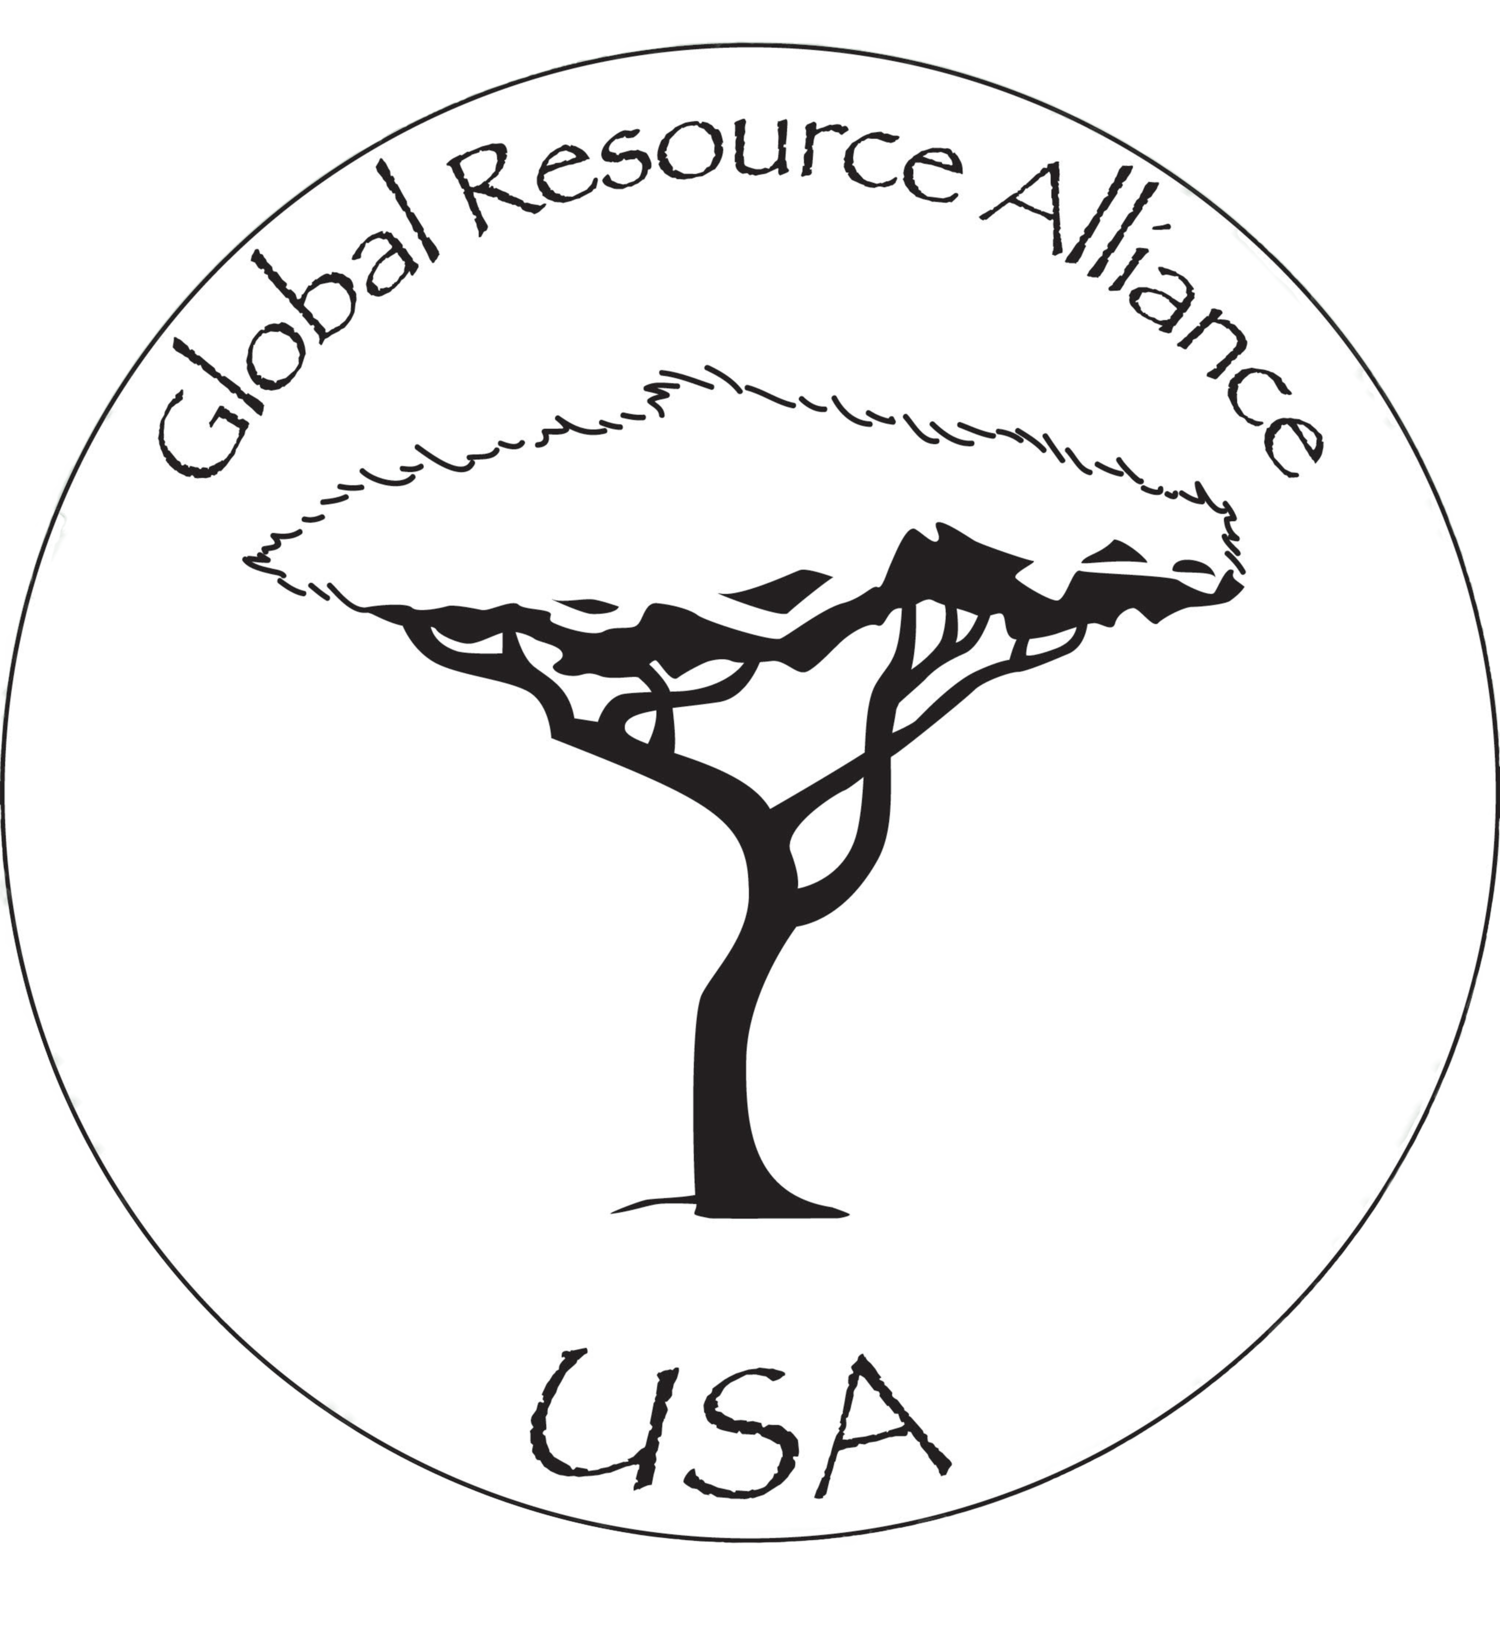 Global Resource Alliance